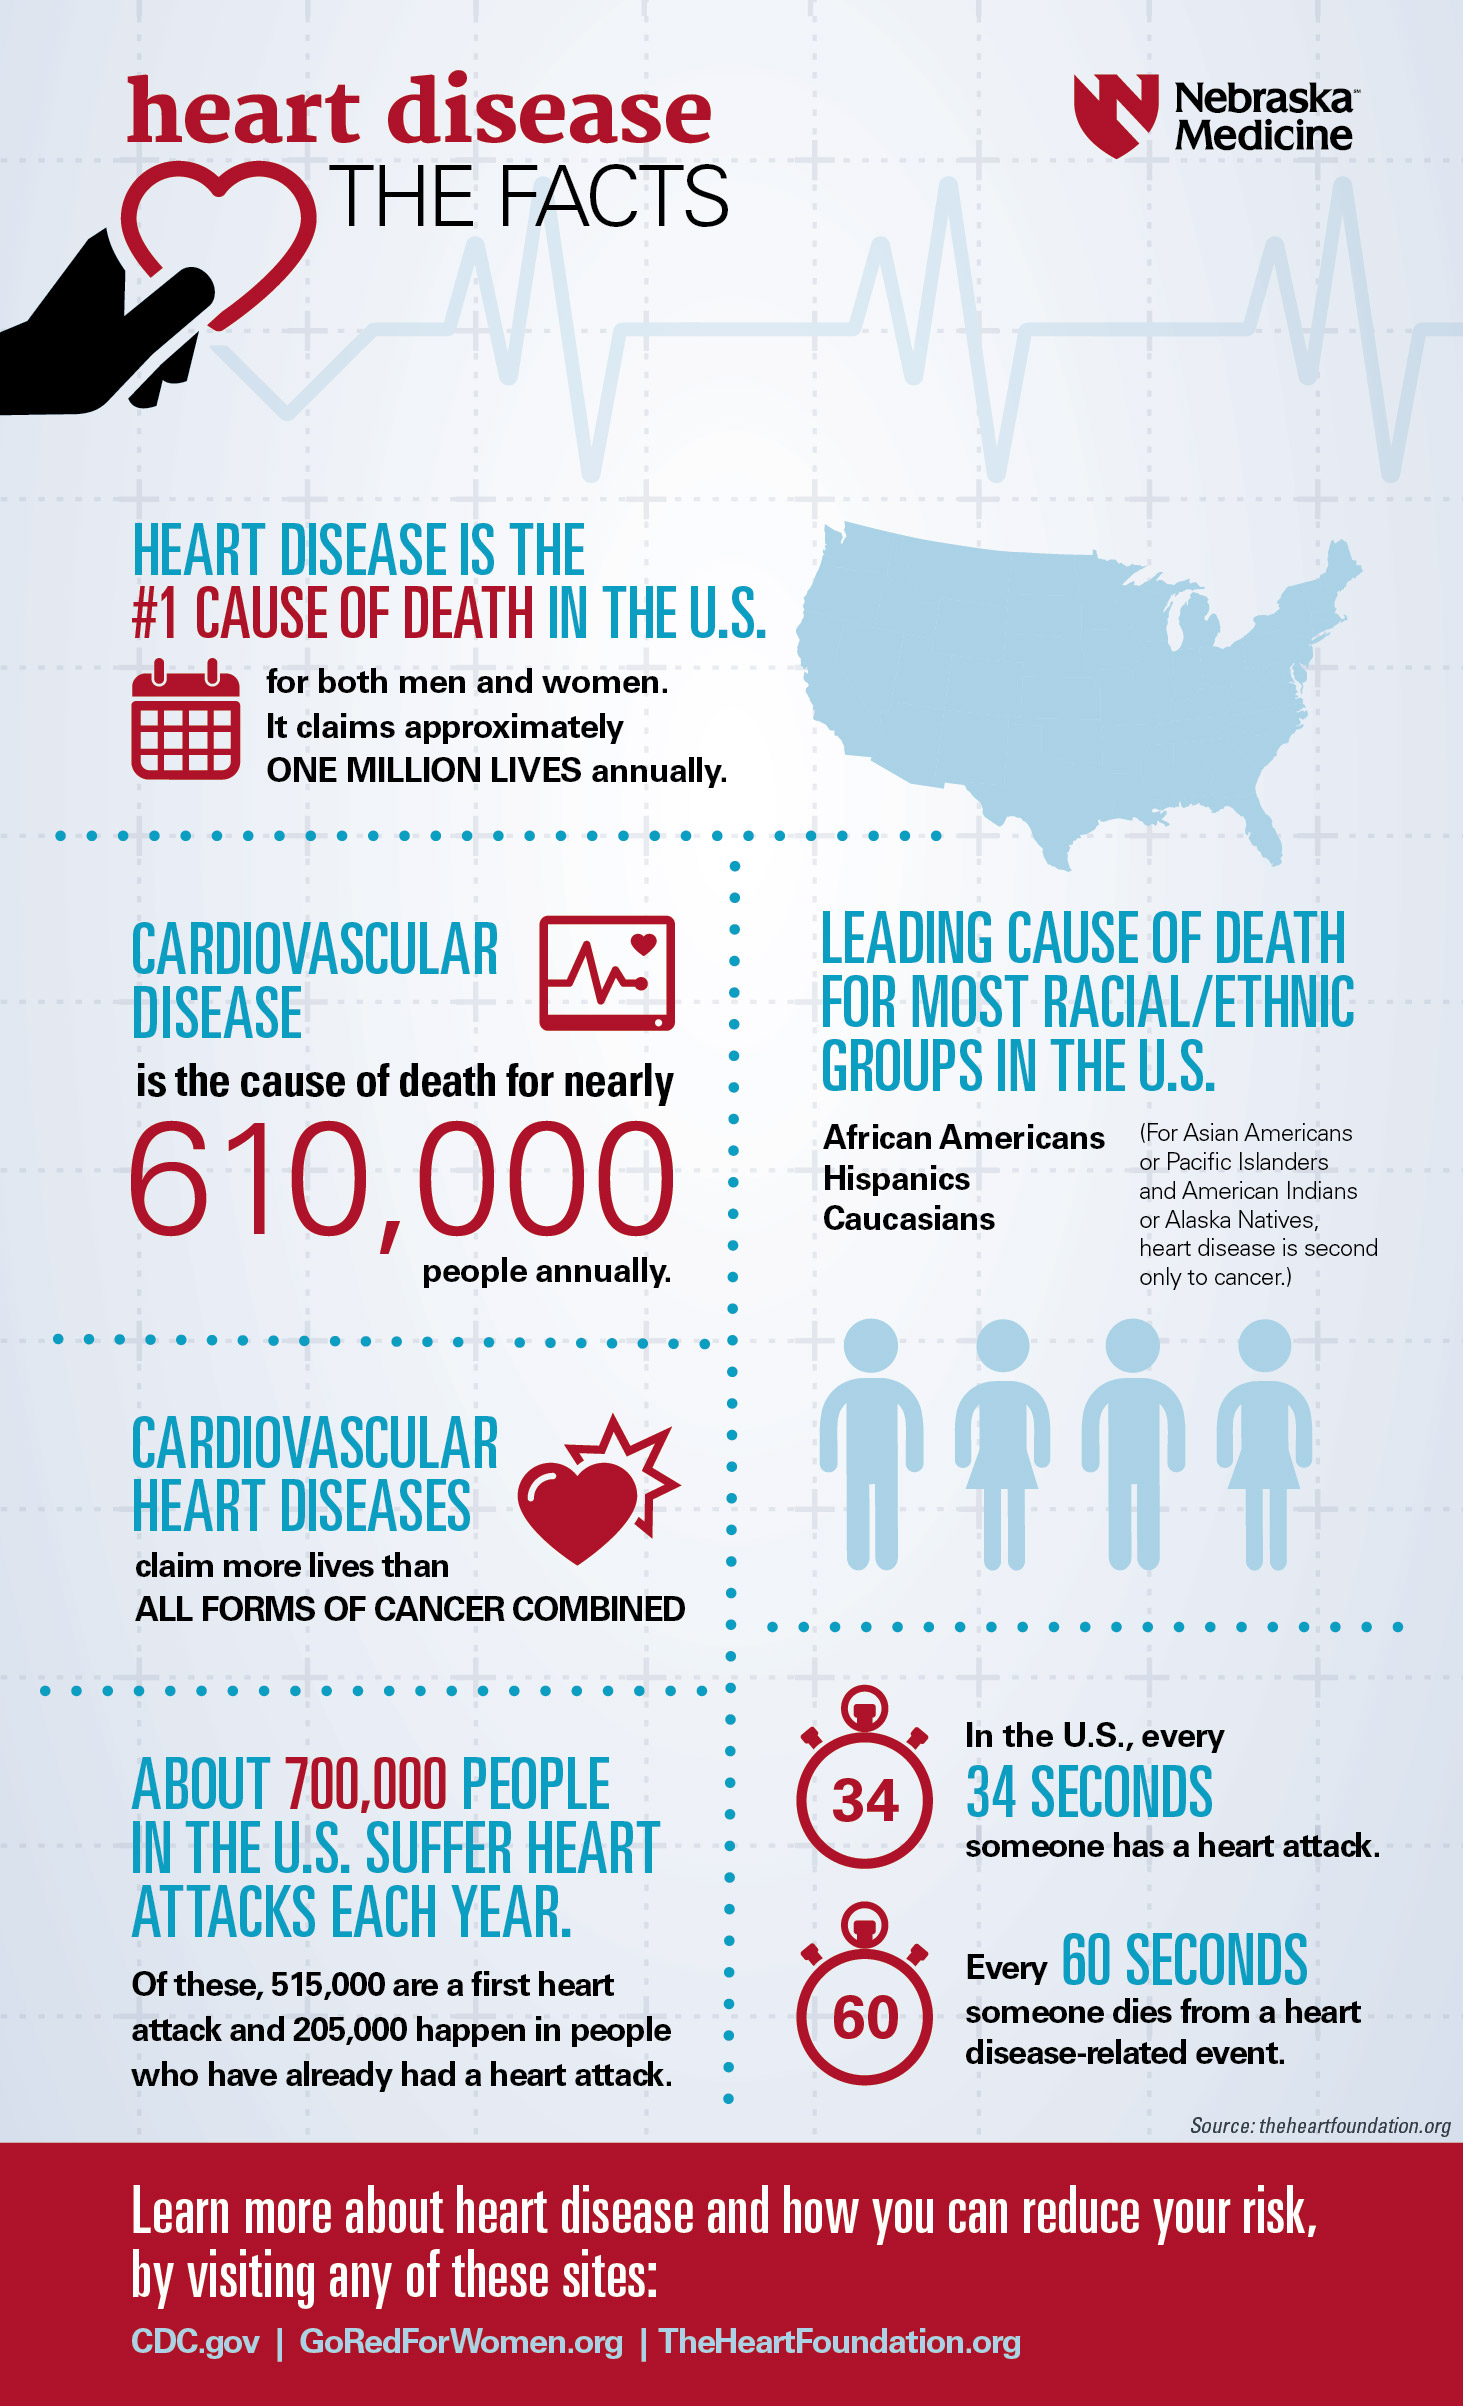 9992-Heart-Disease_Facts-01.jpg